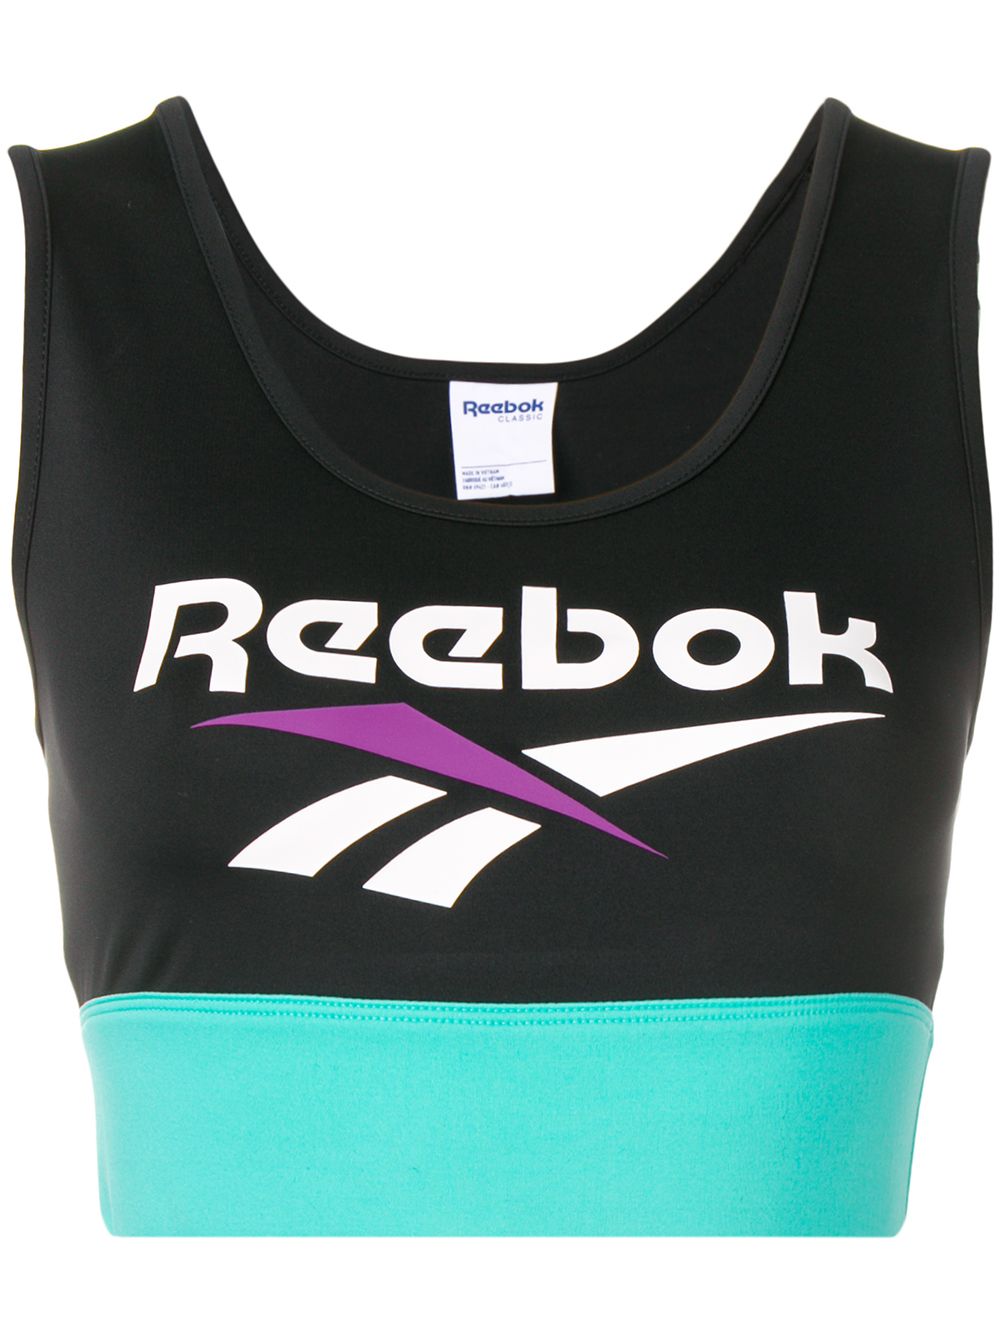 фото Reebok спортивный топ с логотипом